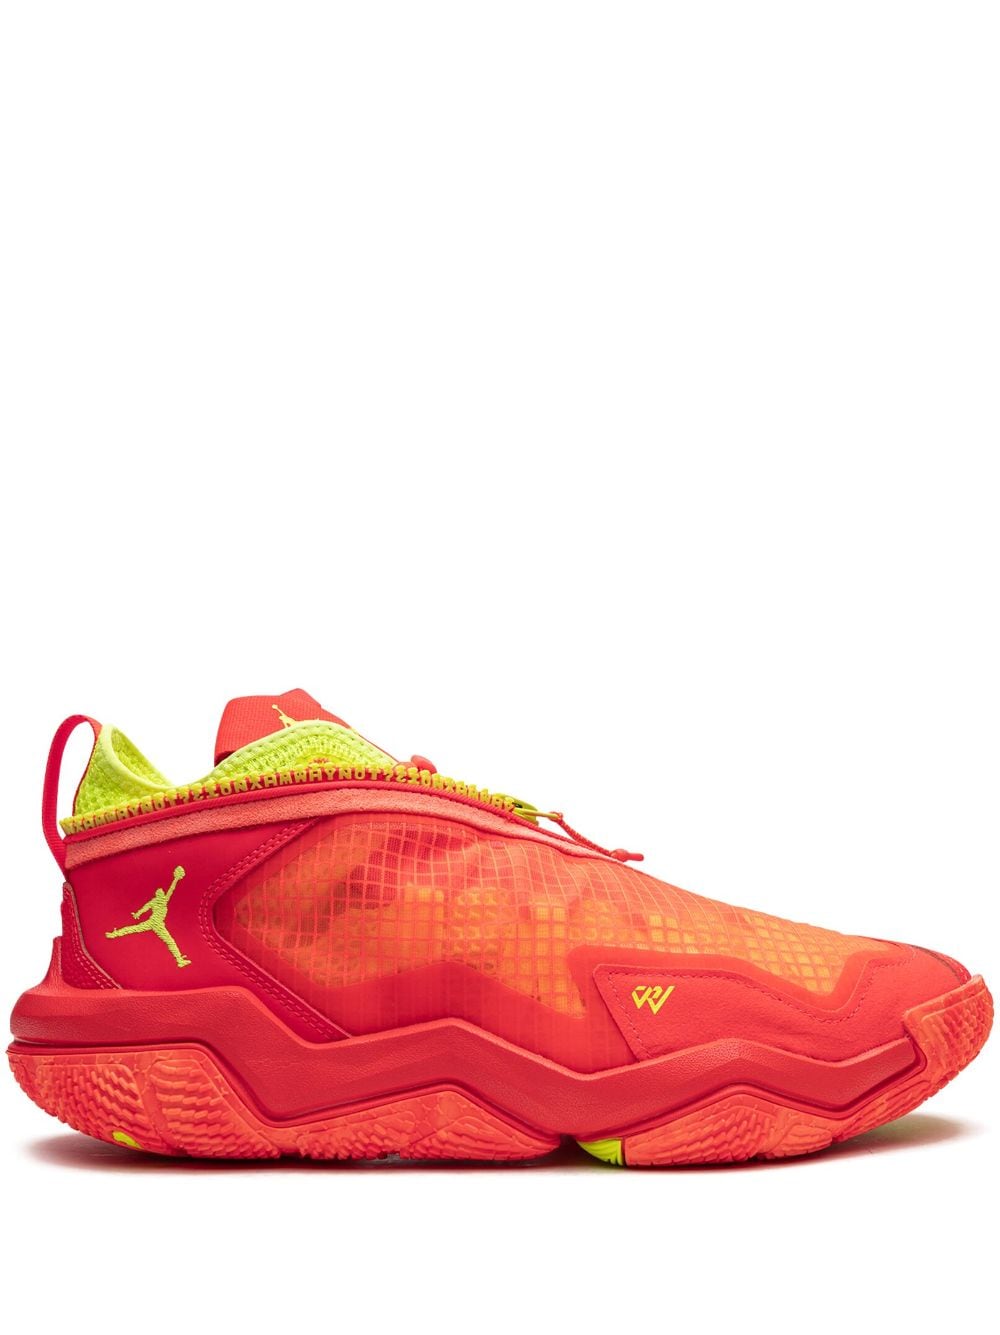 Jordan Why Not Zer0.6 "Bright Crimson" sneakers - Orange